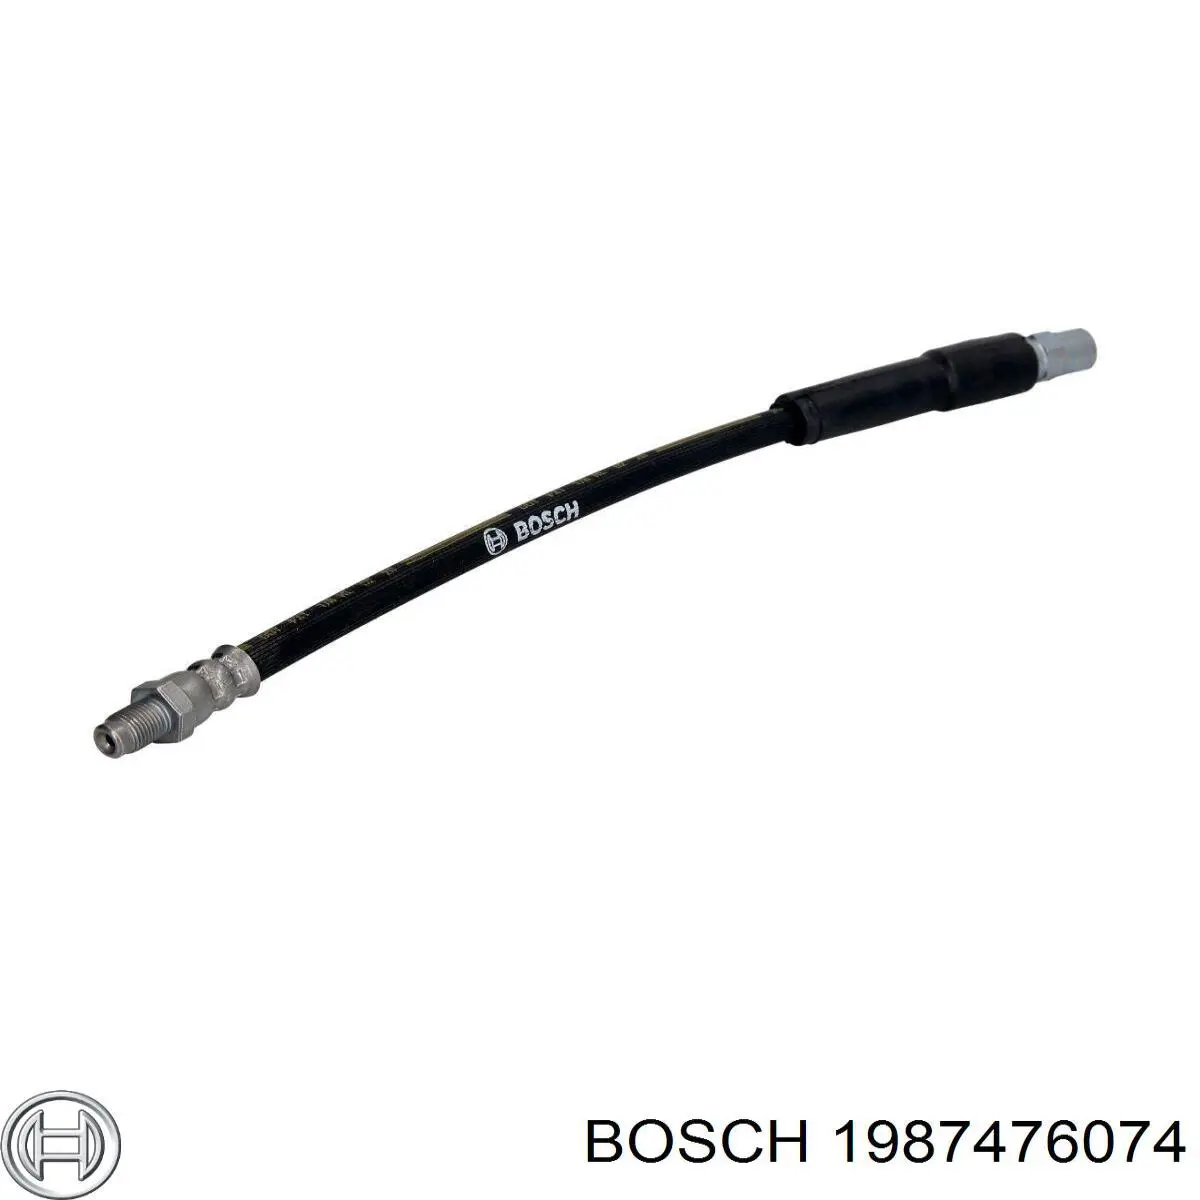 1987476074 Bosch latiguillo de freno trasero